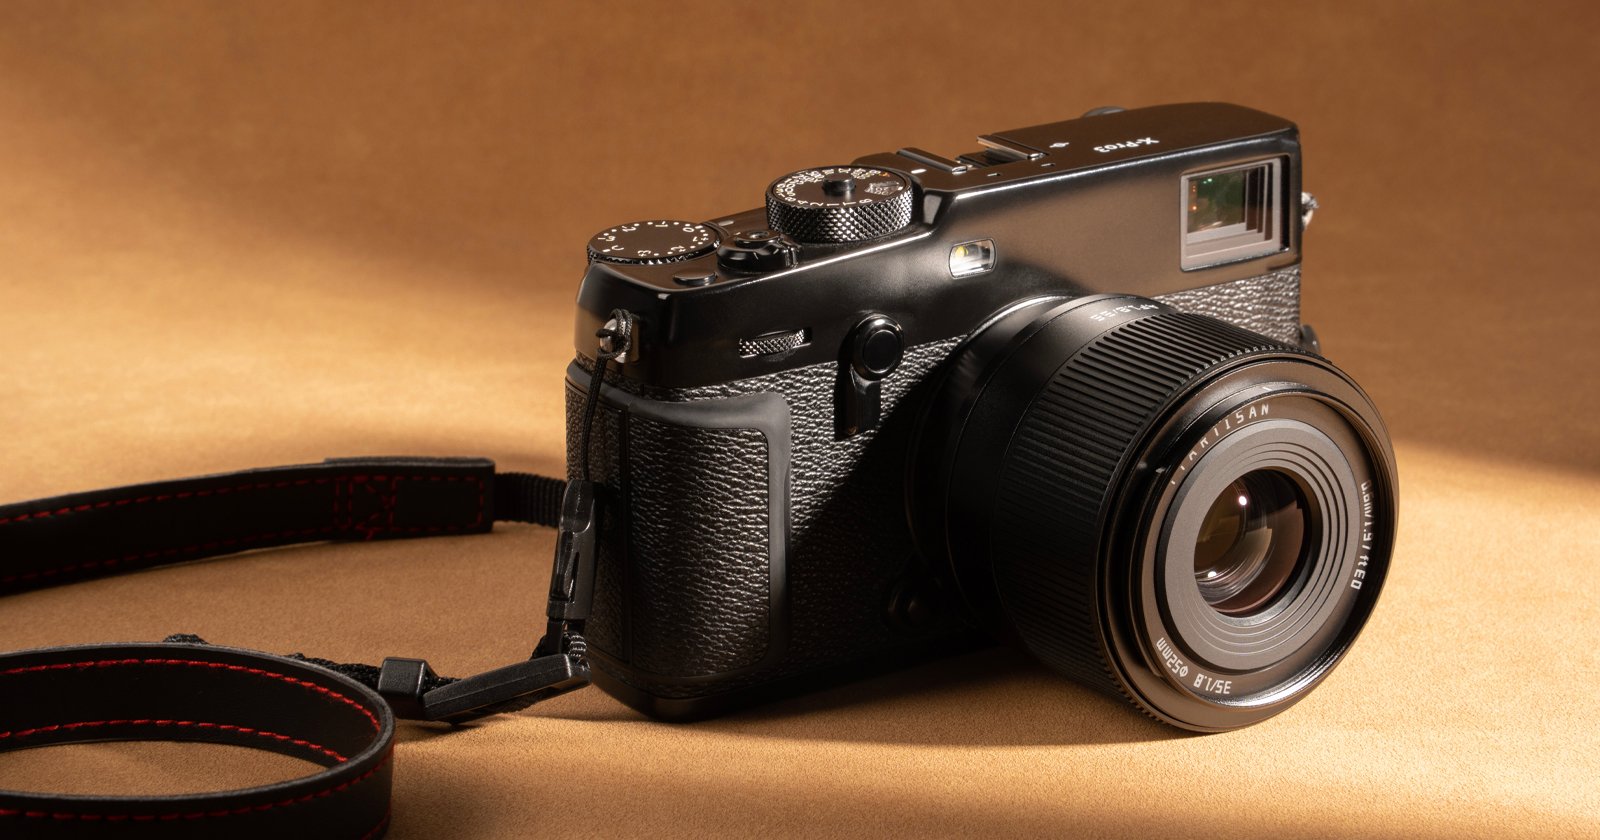 TTArtisans New 35mm f/1.8 Autofocus Lens for APS-C Cameras is Only $149